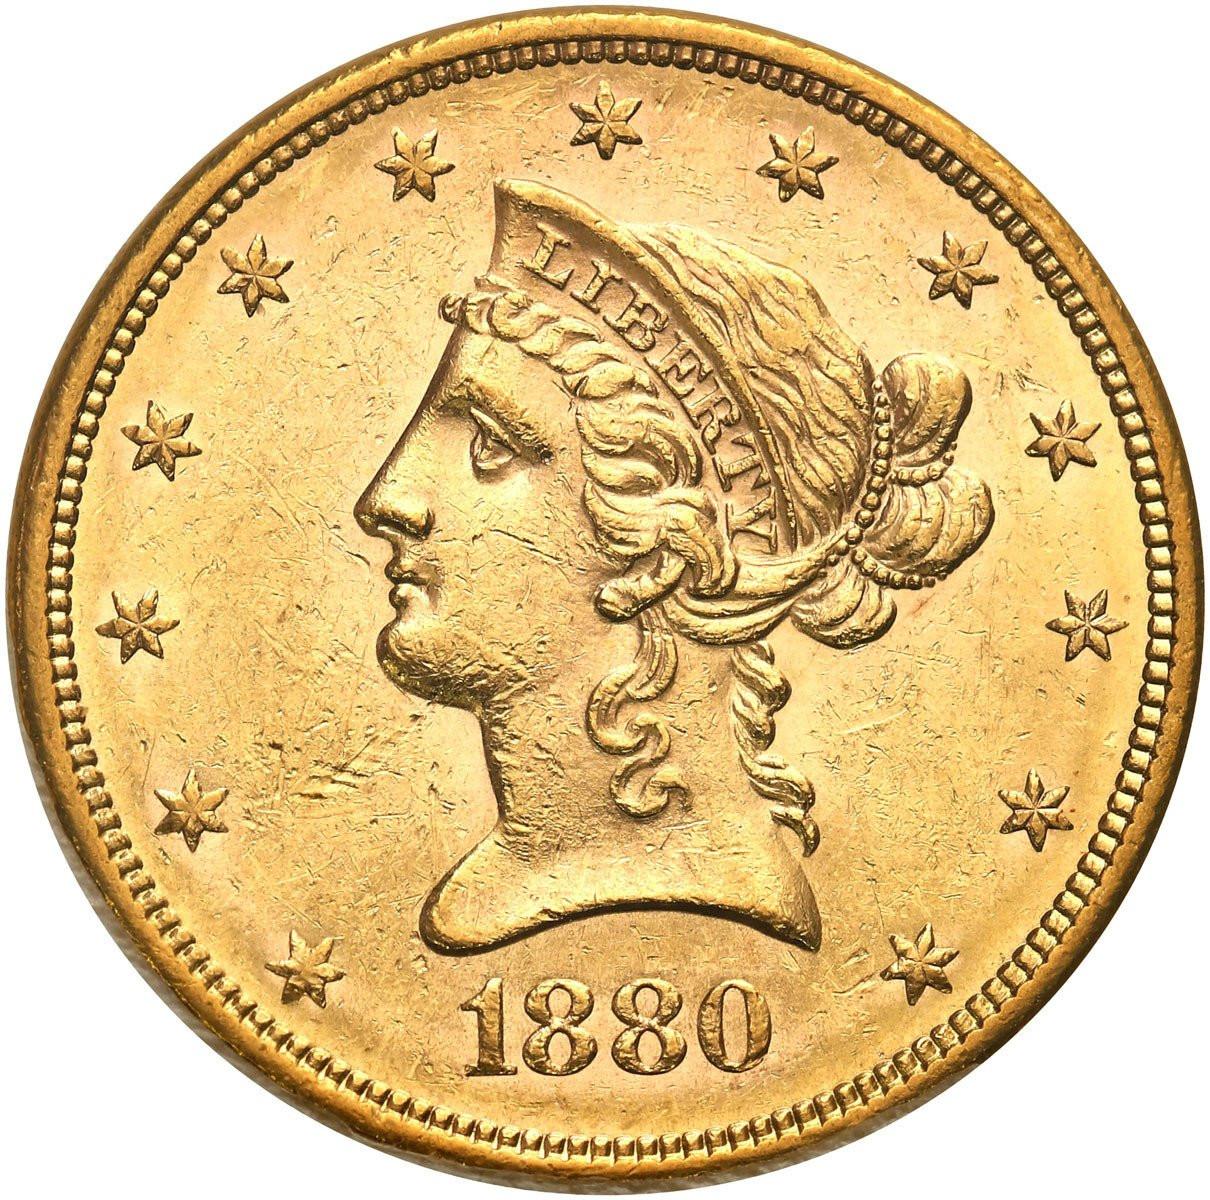 USA.10 dolarów Liberty 1880 San Francisco NAC MS66